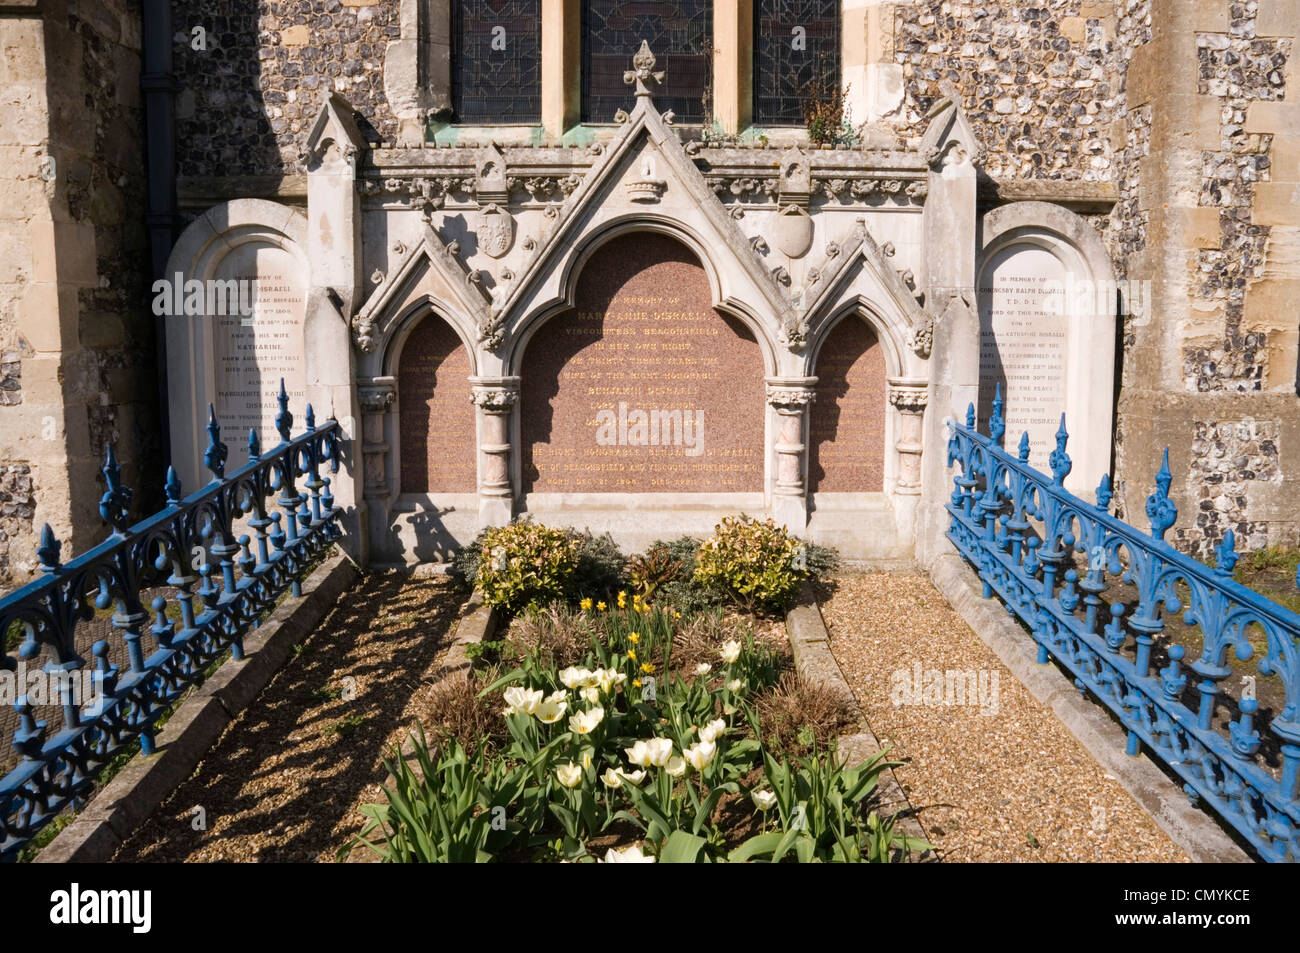 - Bucks Hughenden - St Michael's Church - tombe de Benjamin Disraeli - Lord Beaconsfield -Premier Ministre de la Reine Victoria . Banque D'Images